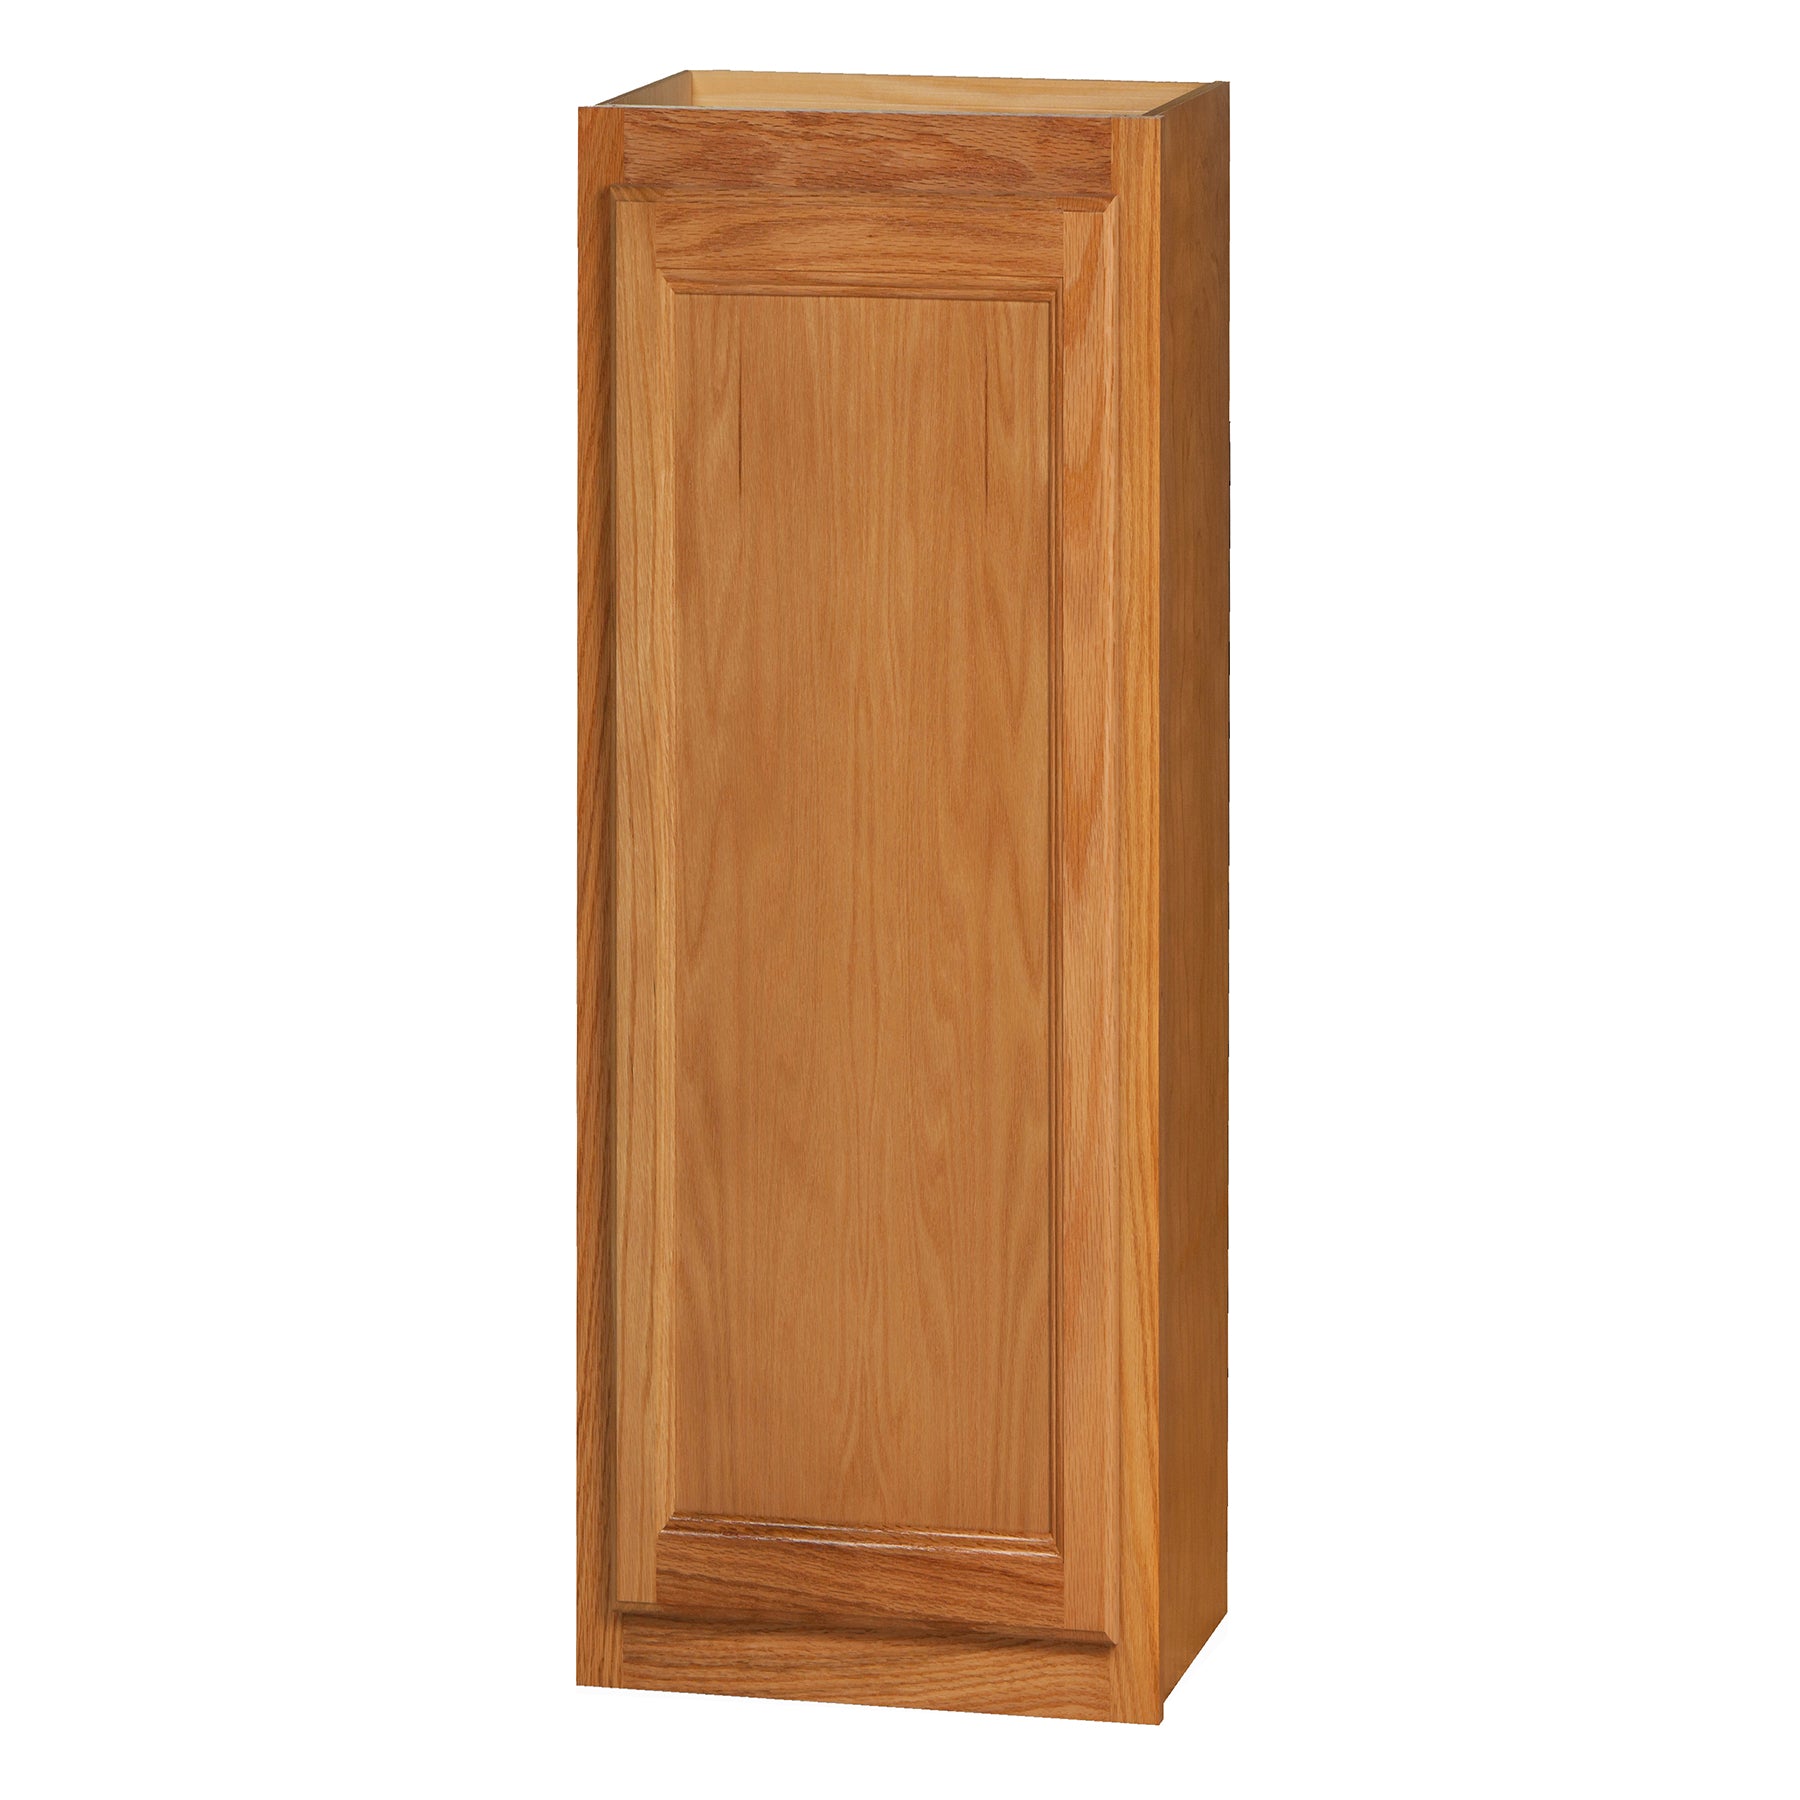 36 inch Wall Cabinets - Chadwood Shaker - 15 Inch W x 36 Inch H x 12 Inch D